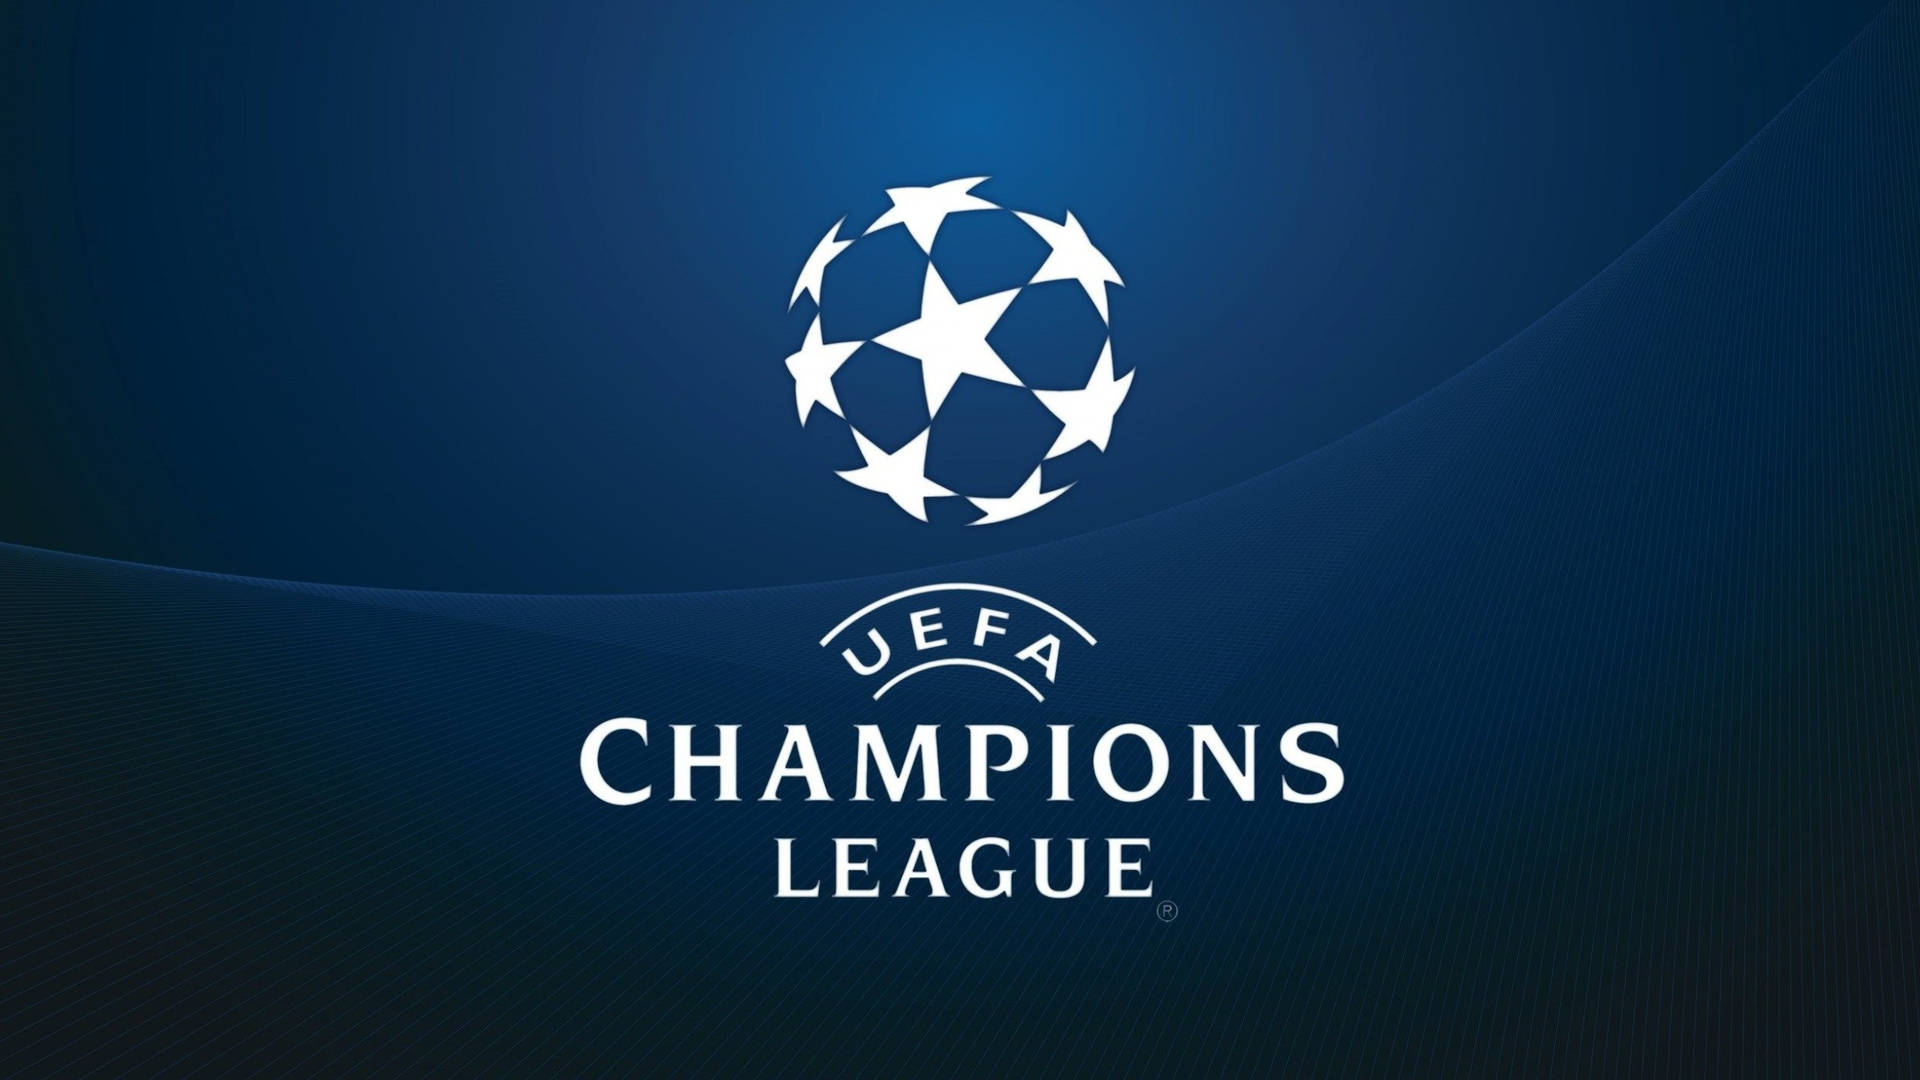 Uefa Champions League Background Wallpaper